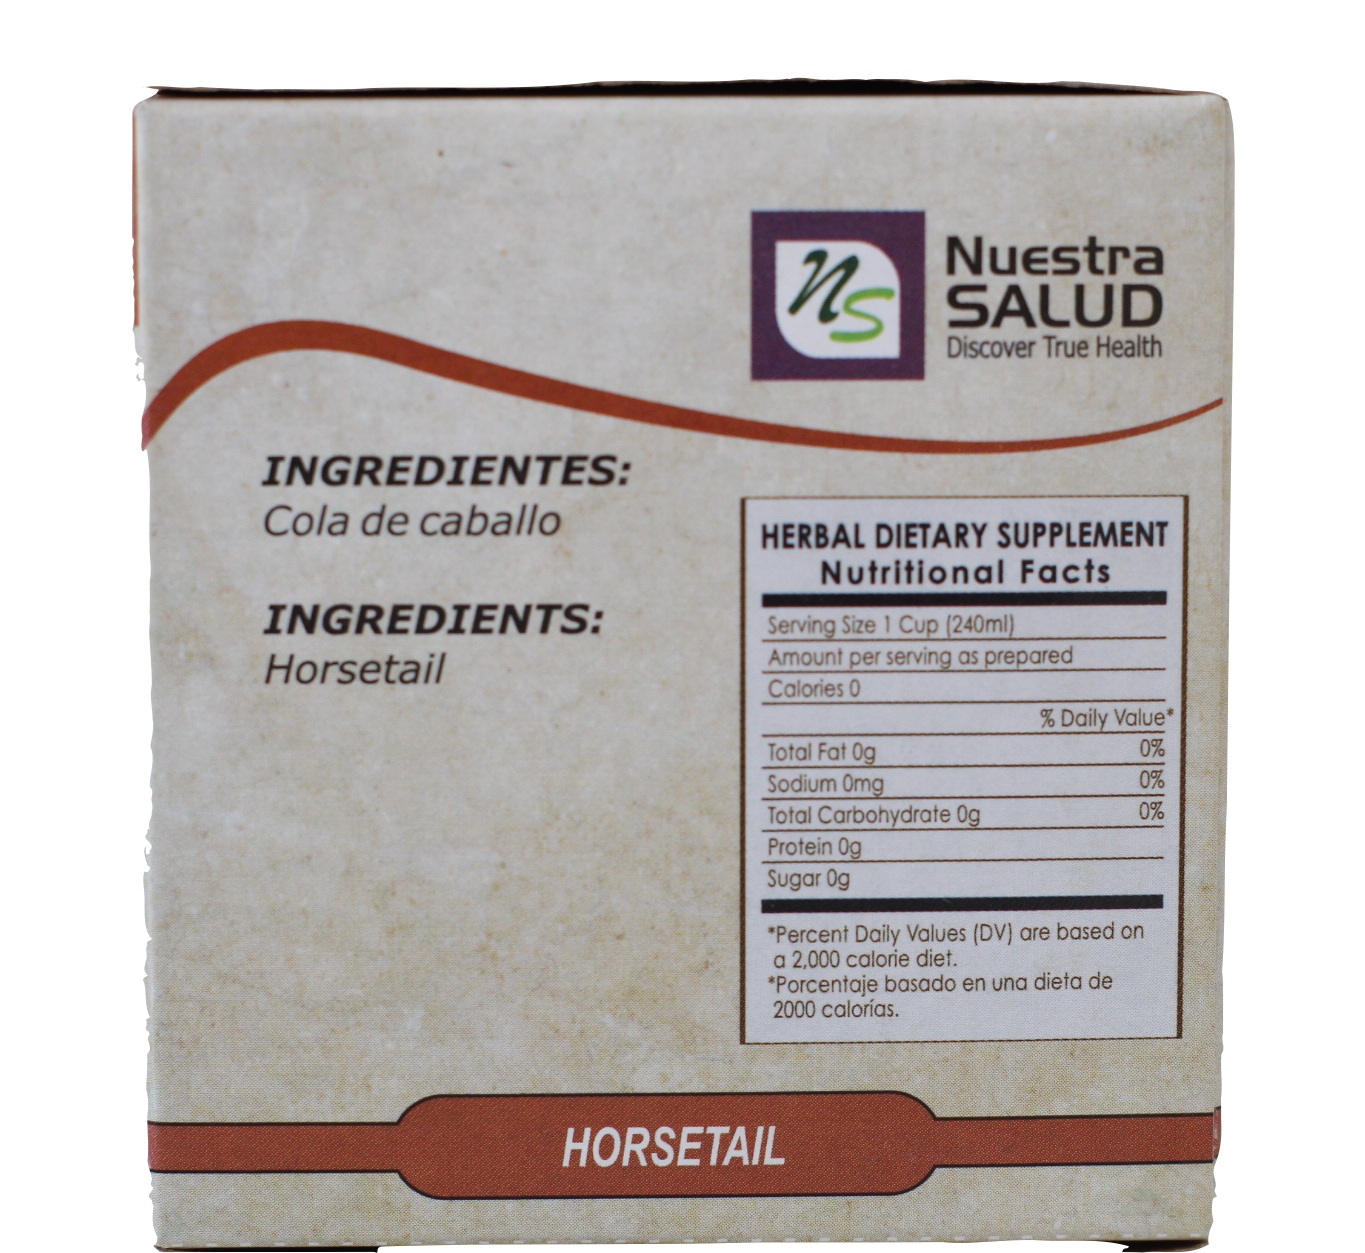 Horsetail Tea Cola De Caballo Herbal Tea (60 tea bags) Nuestra Salud